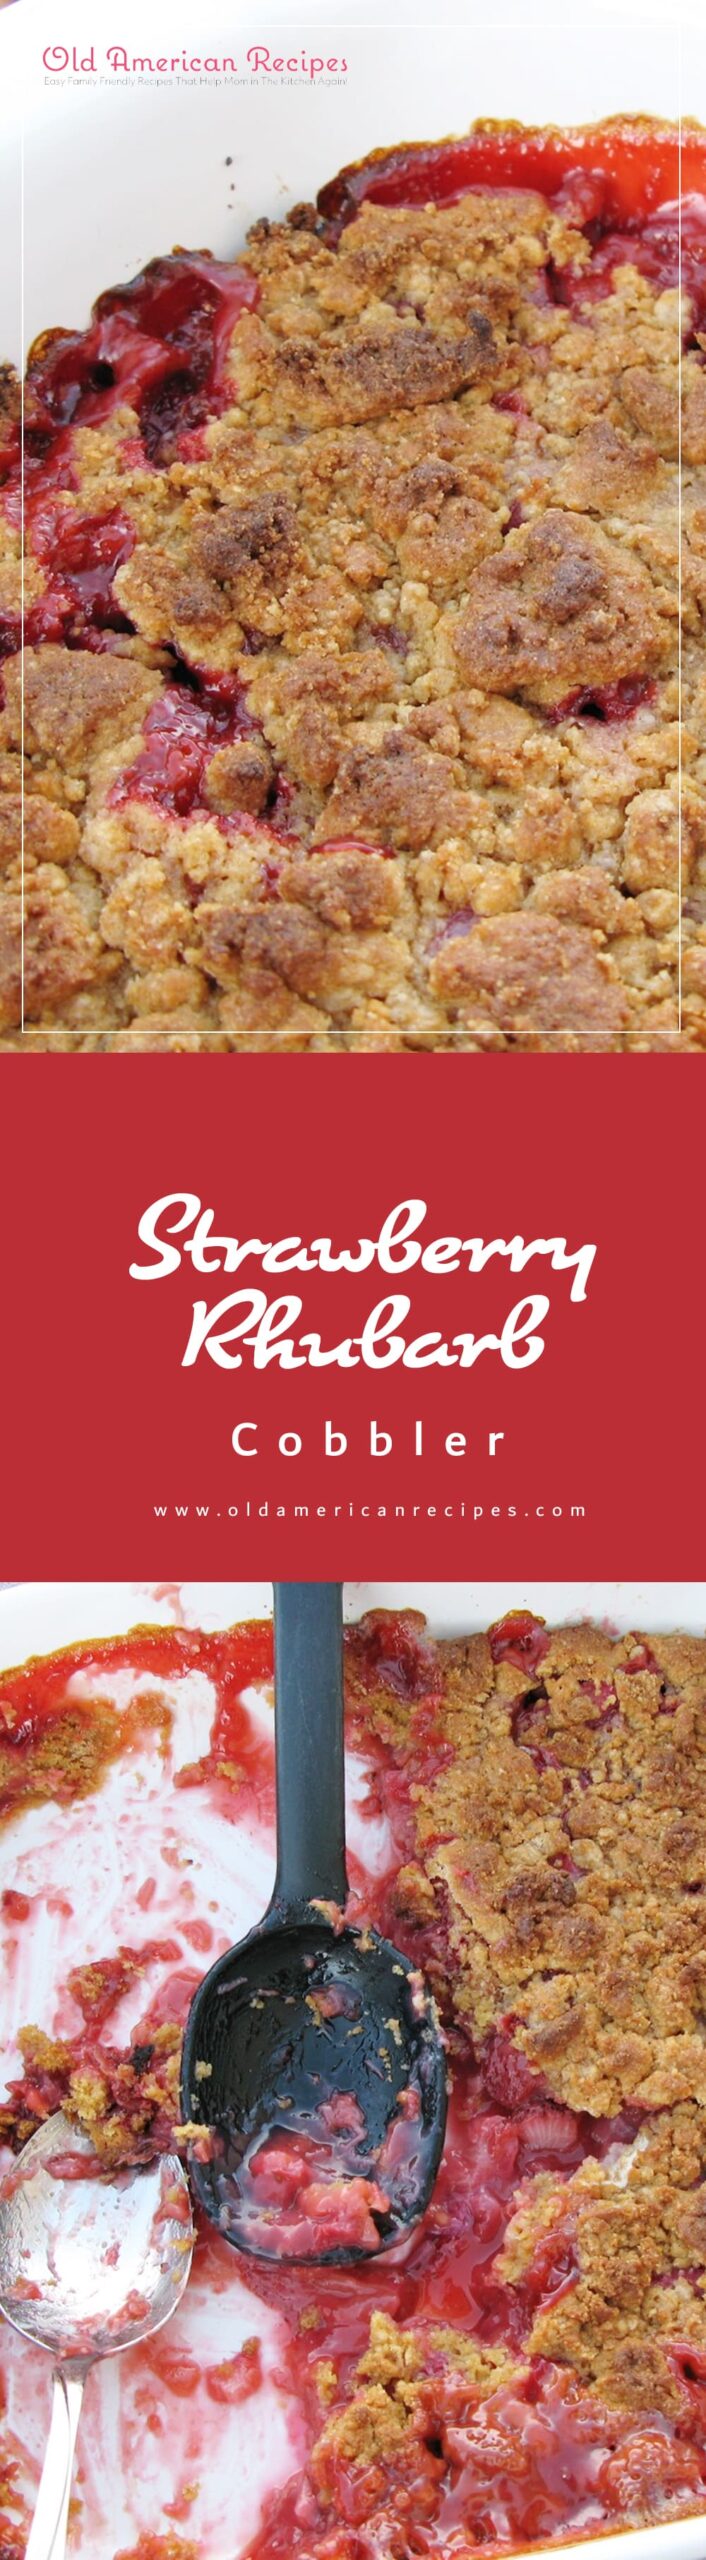 Strawberry-Rhubarb Cobbler